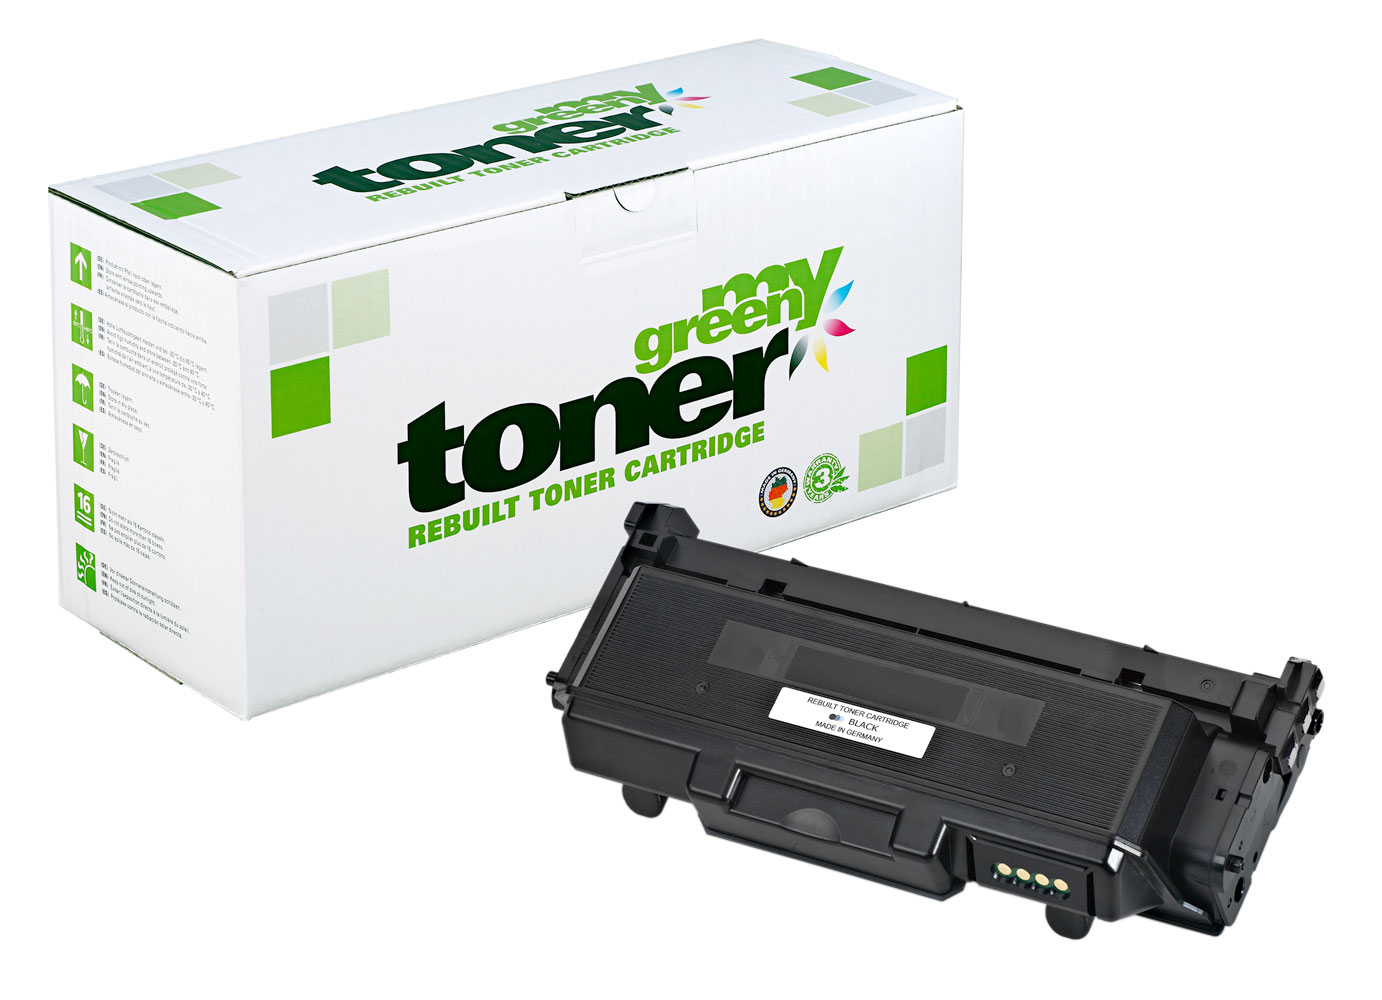 Rebuilt toner cartridge for HP Laser 408, MFP 432 HC-Version